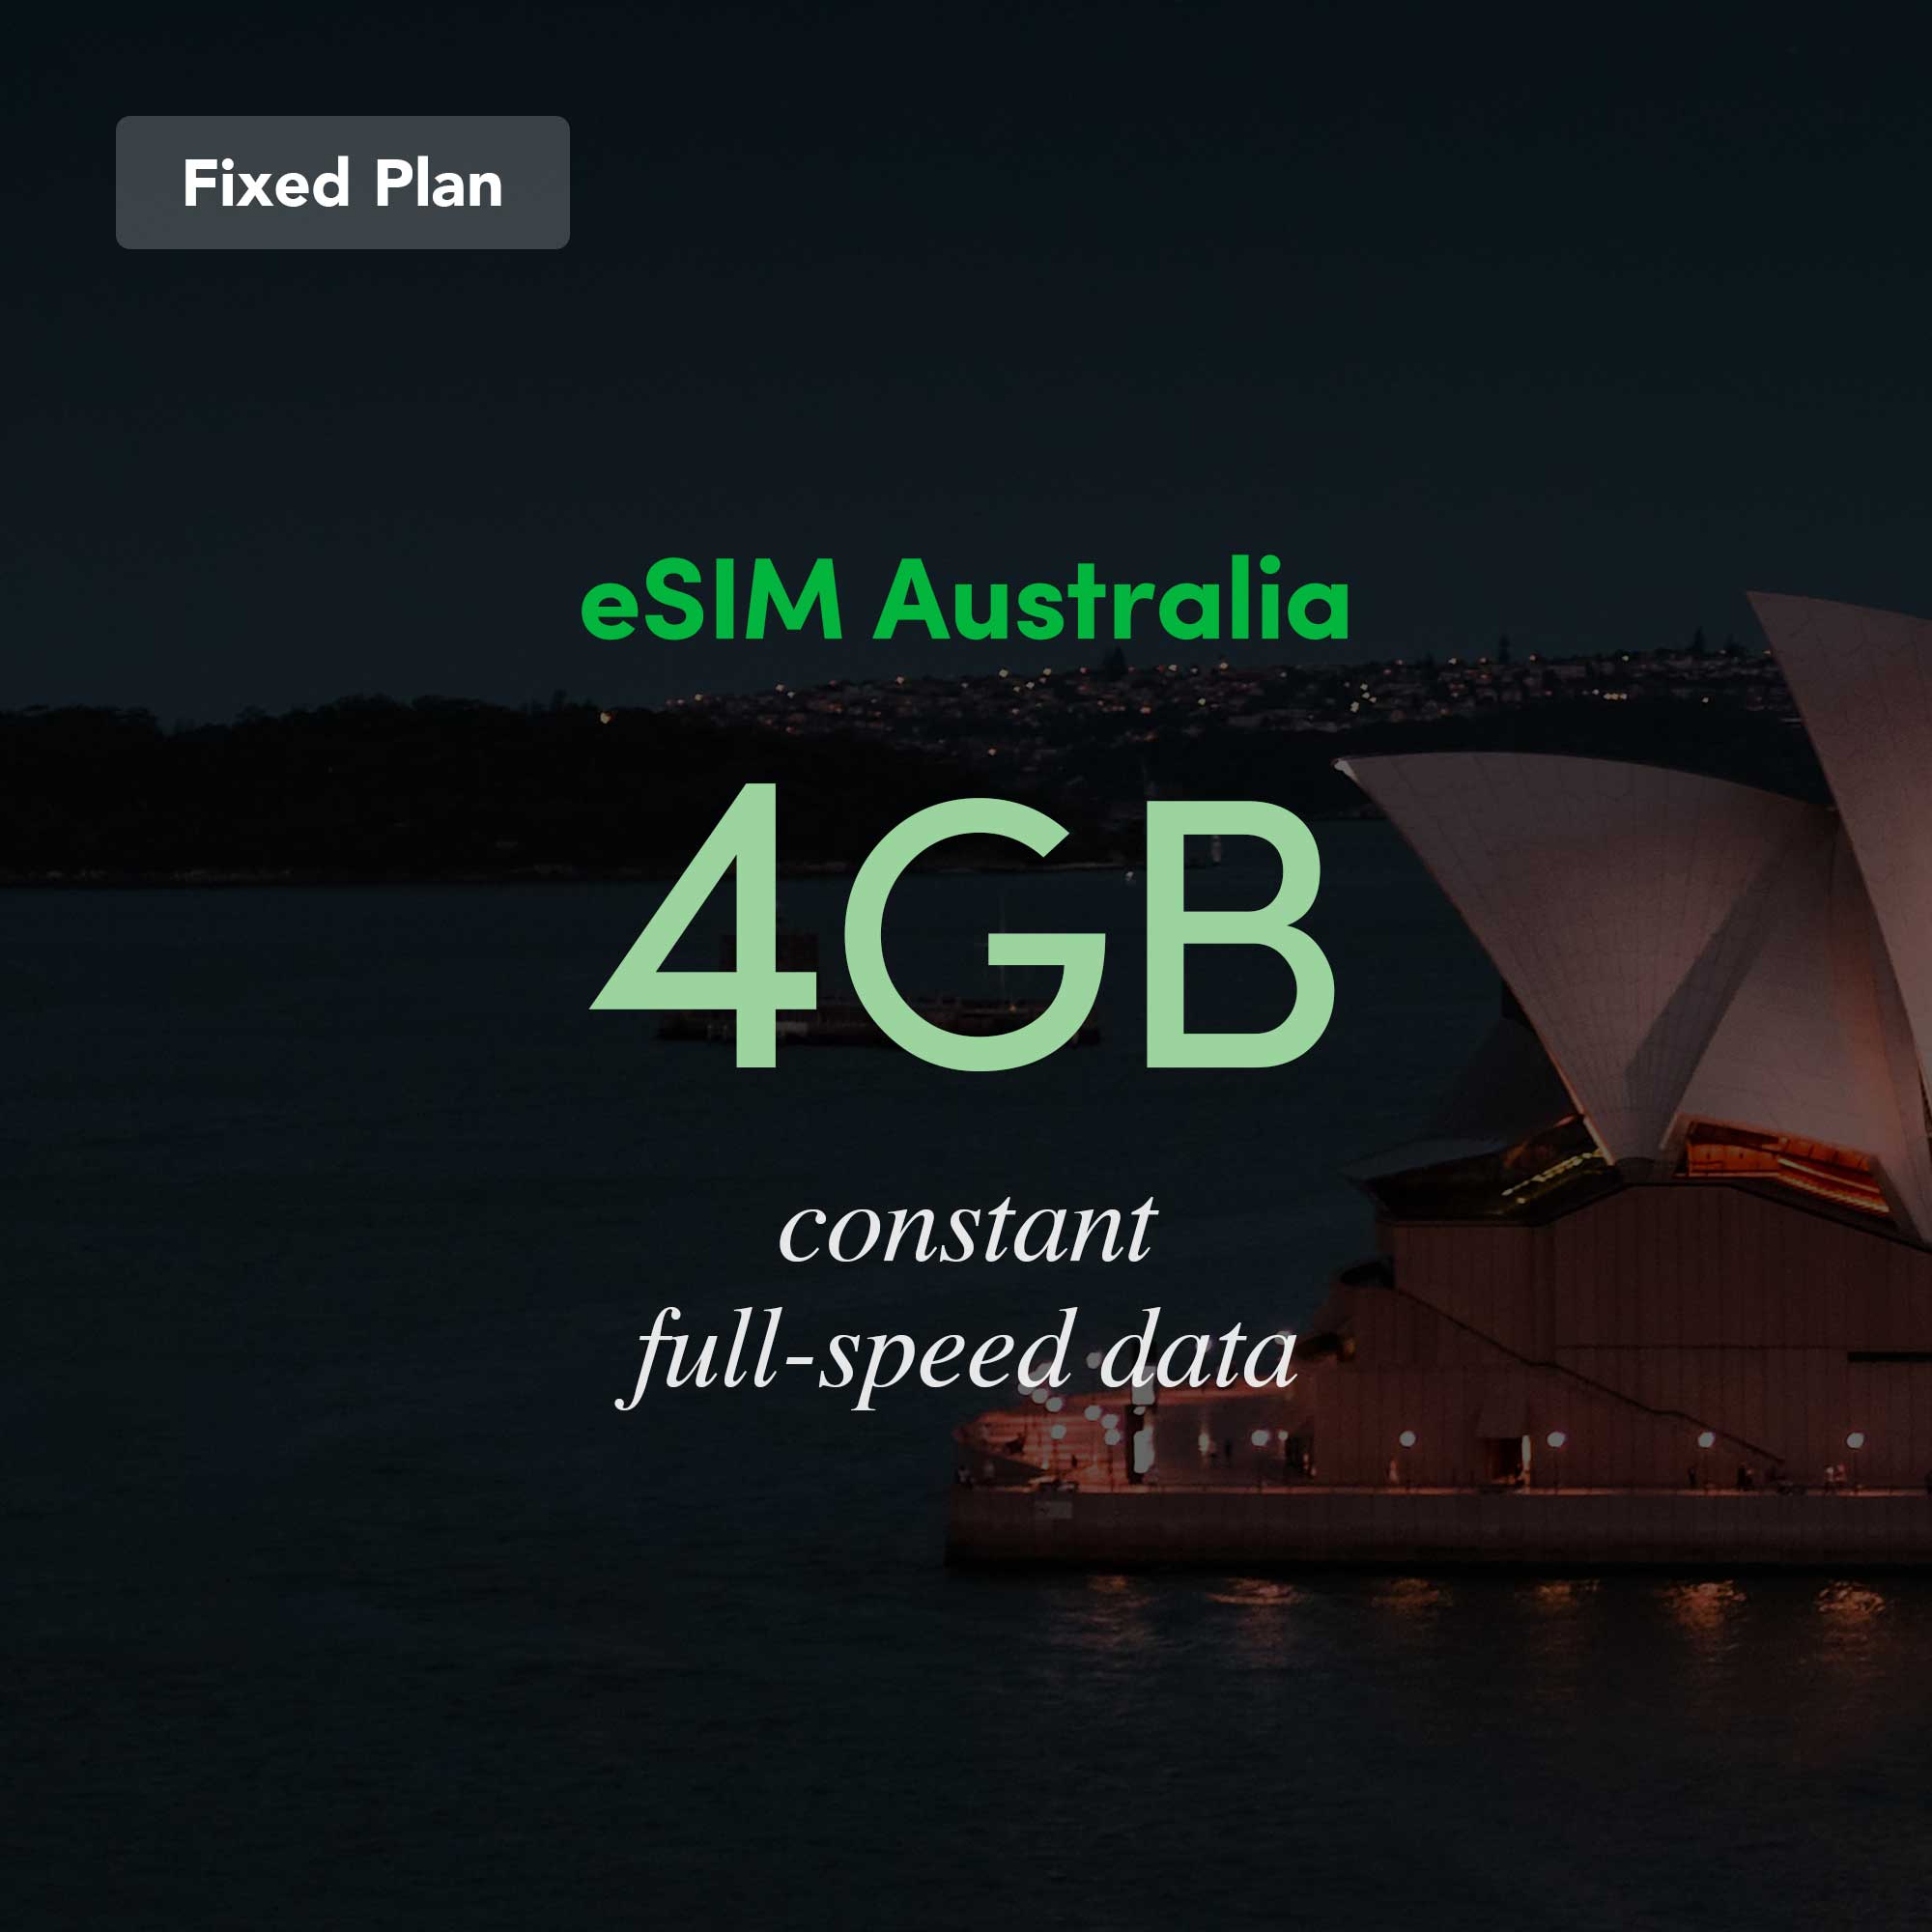 eSIM Australia Fixed Plan 4GB